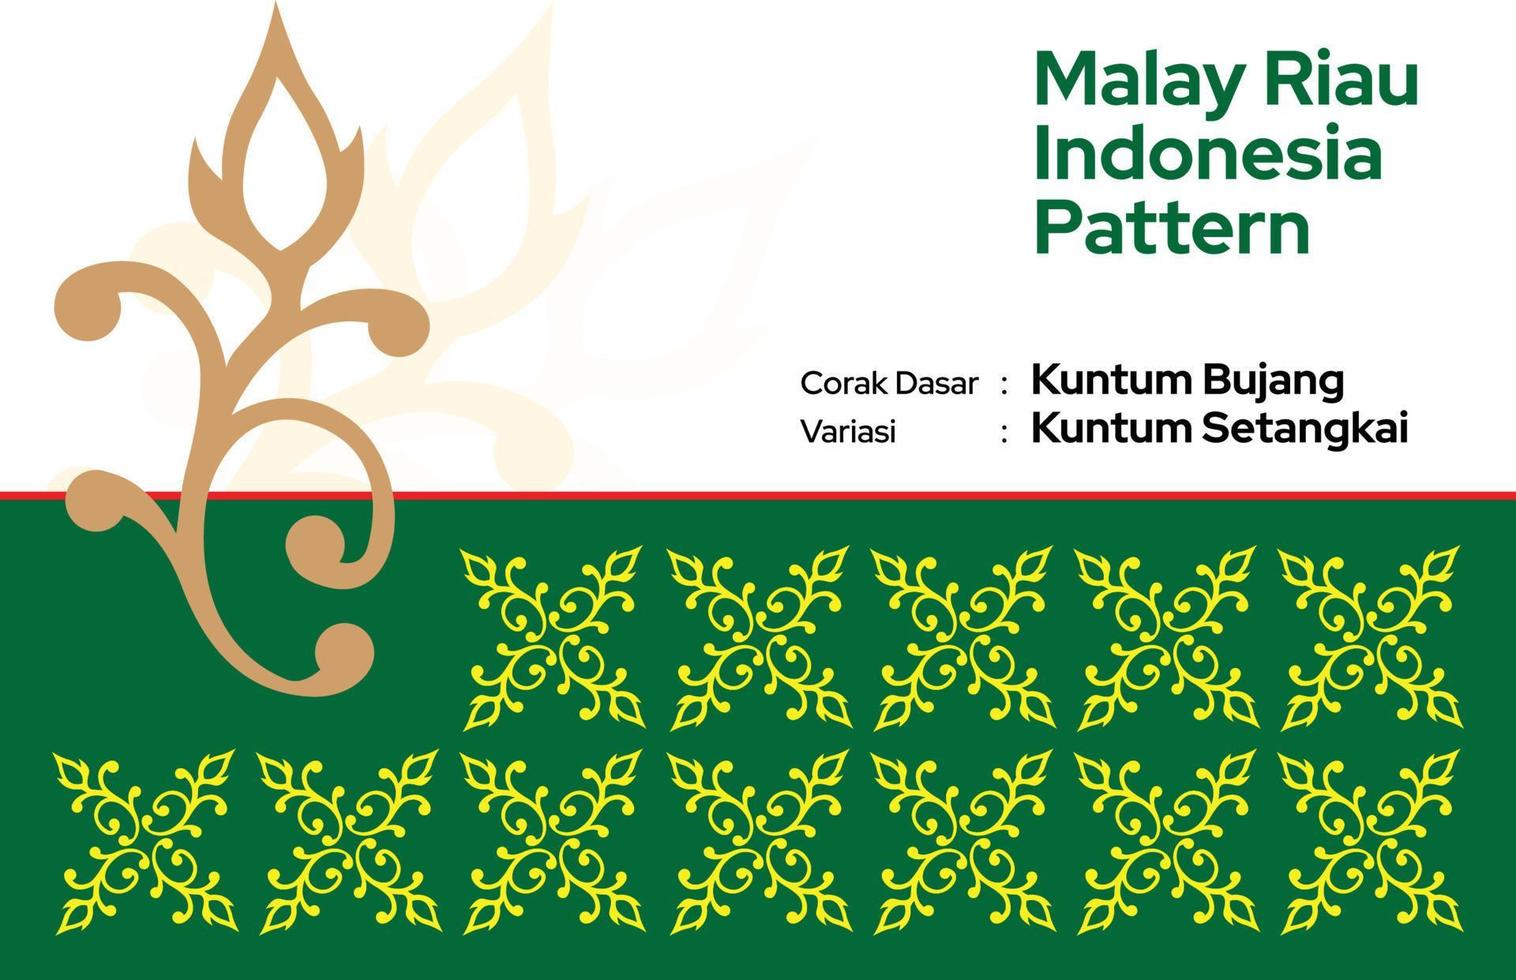 modello malese Riau batik songket tenun, tessitura motivo sughero dan ragù kuntum bujang setangkai melayu vettore